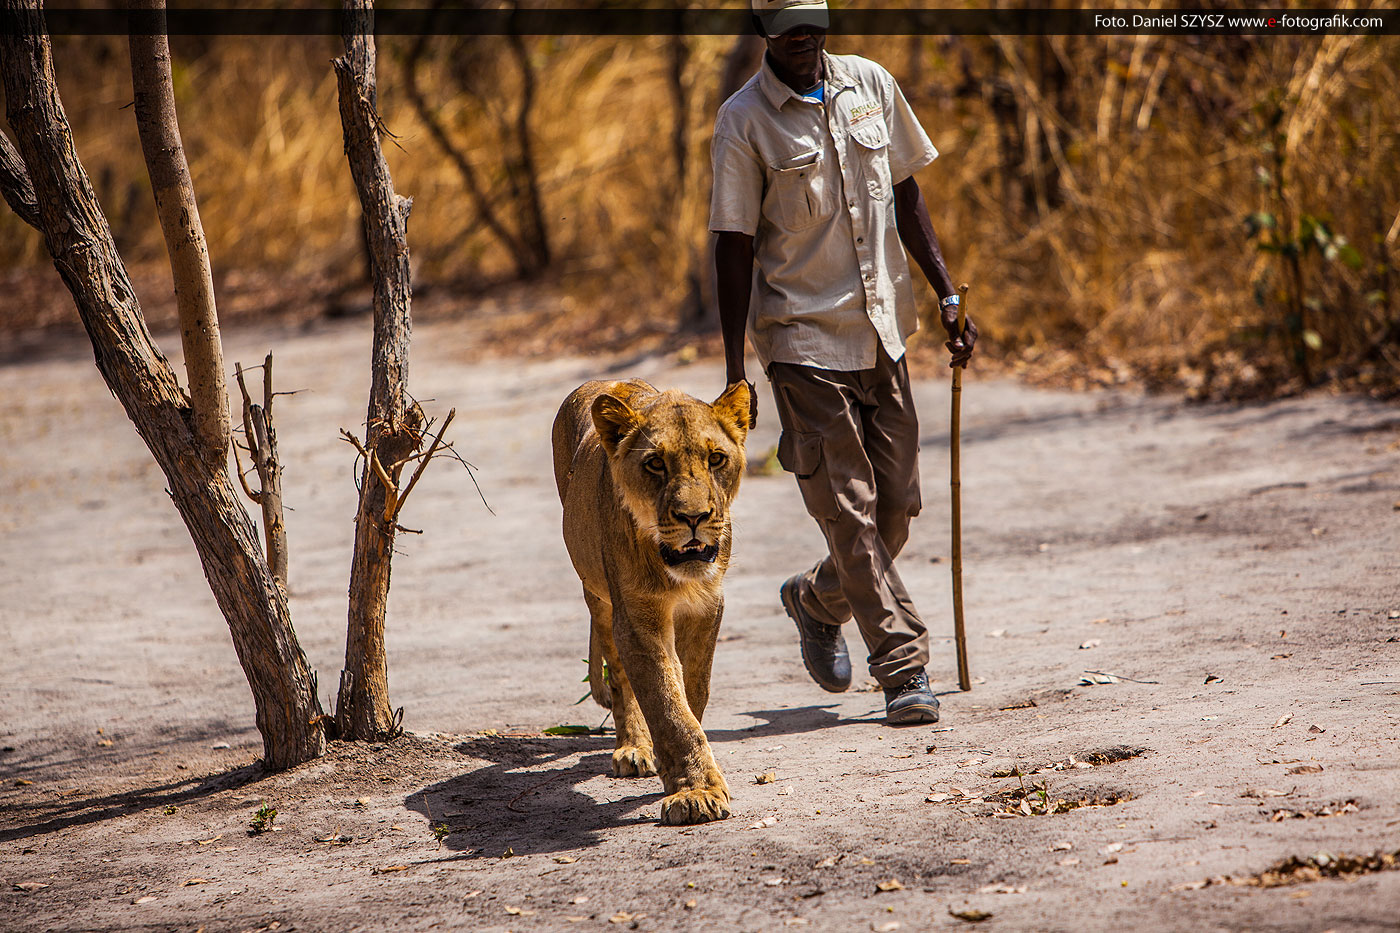   Spacer z lwami w Senegalu